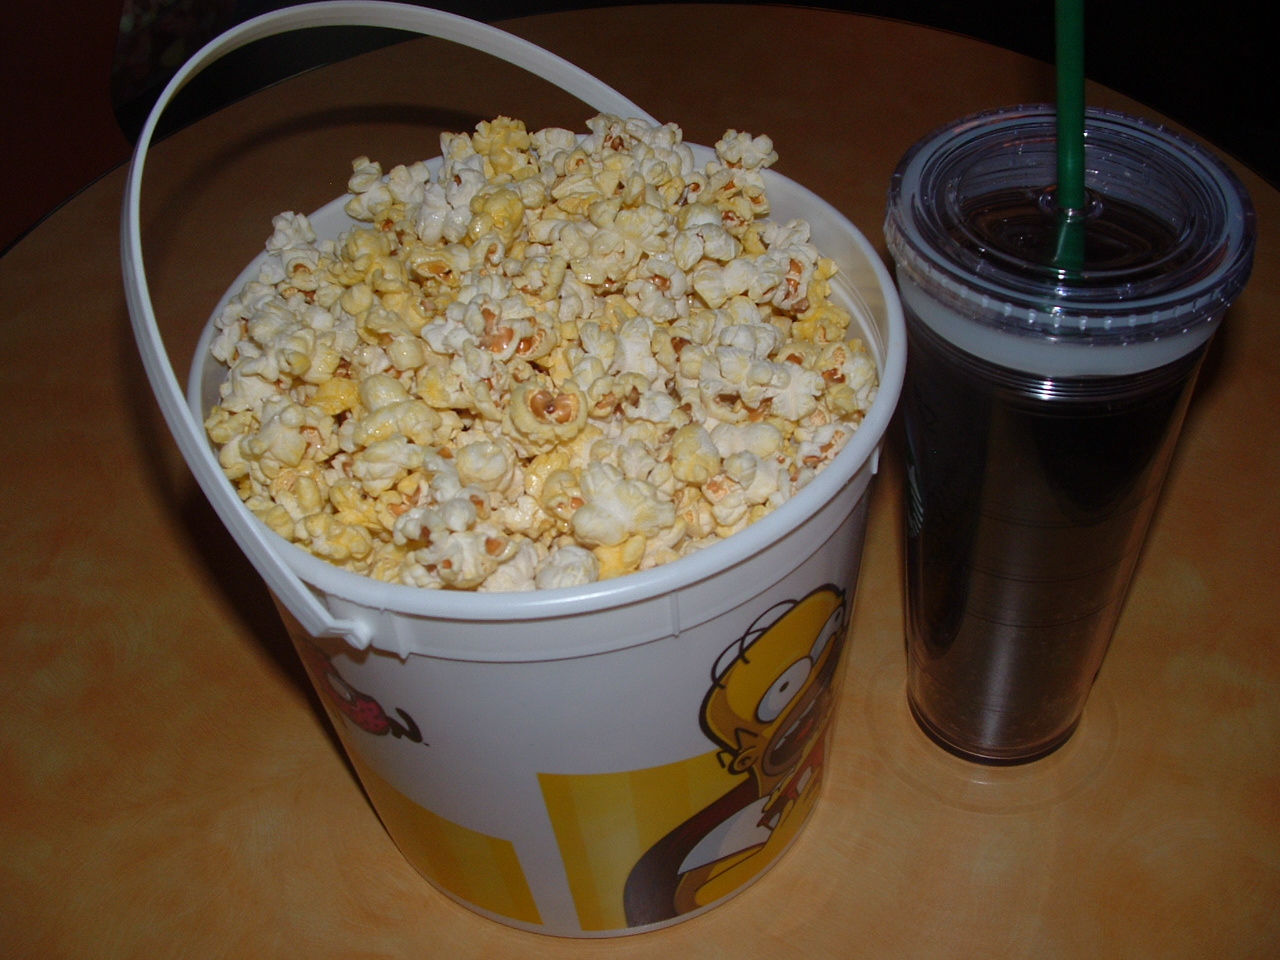 cineplex popcorn refill